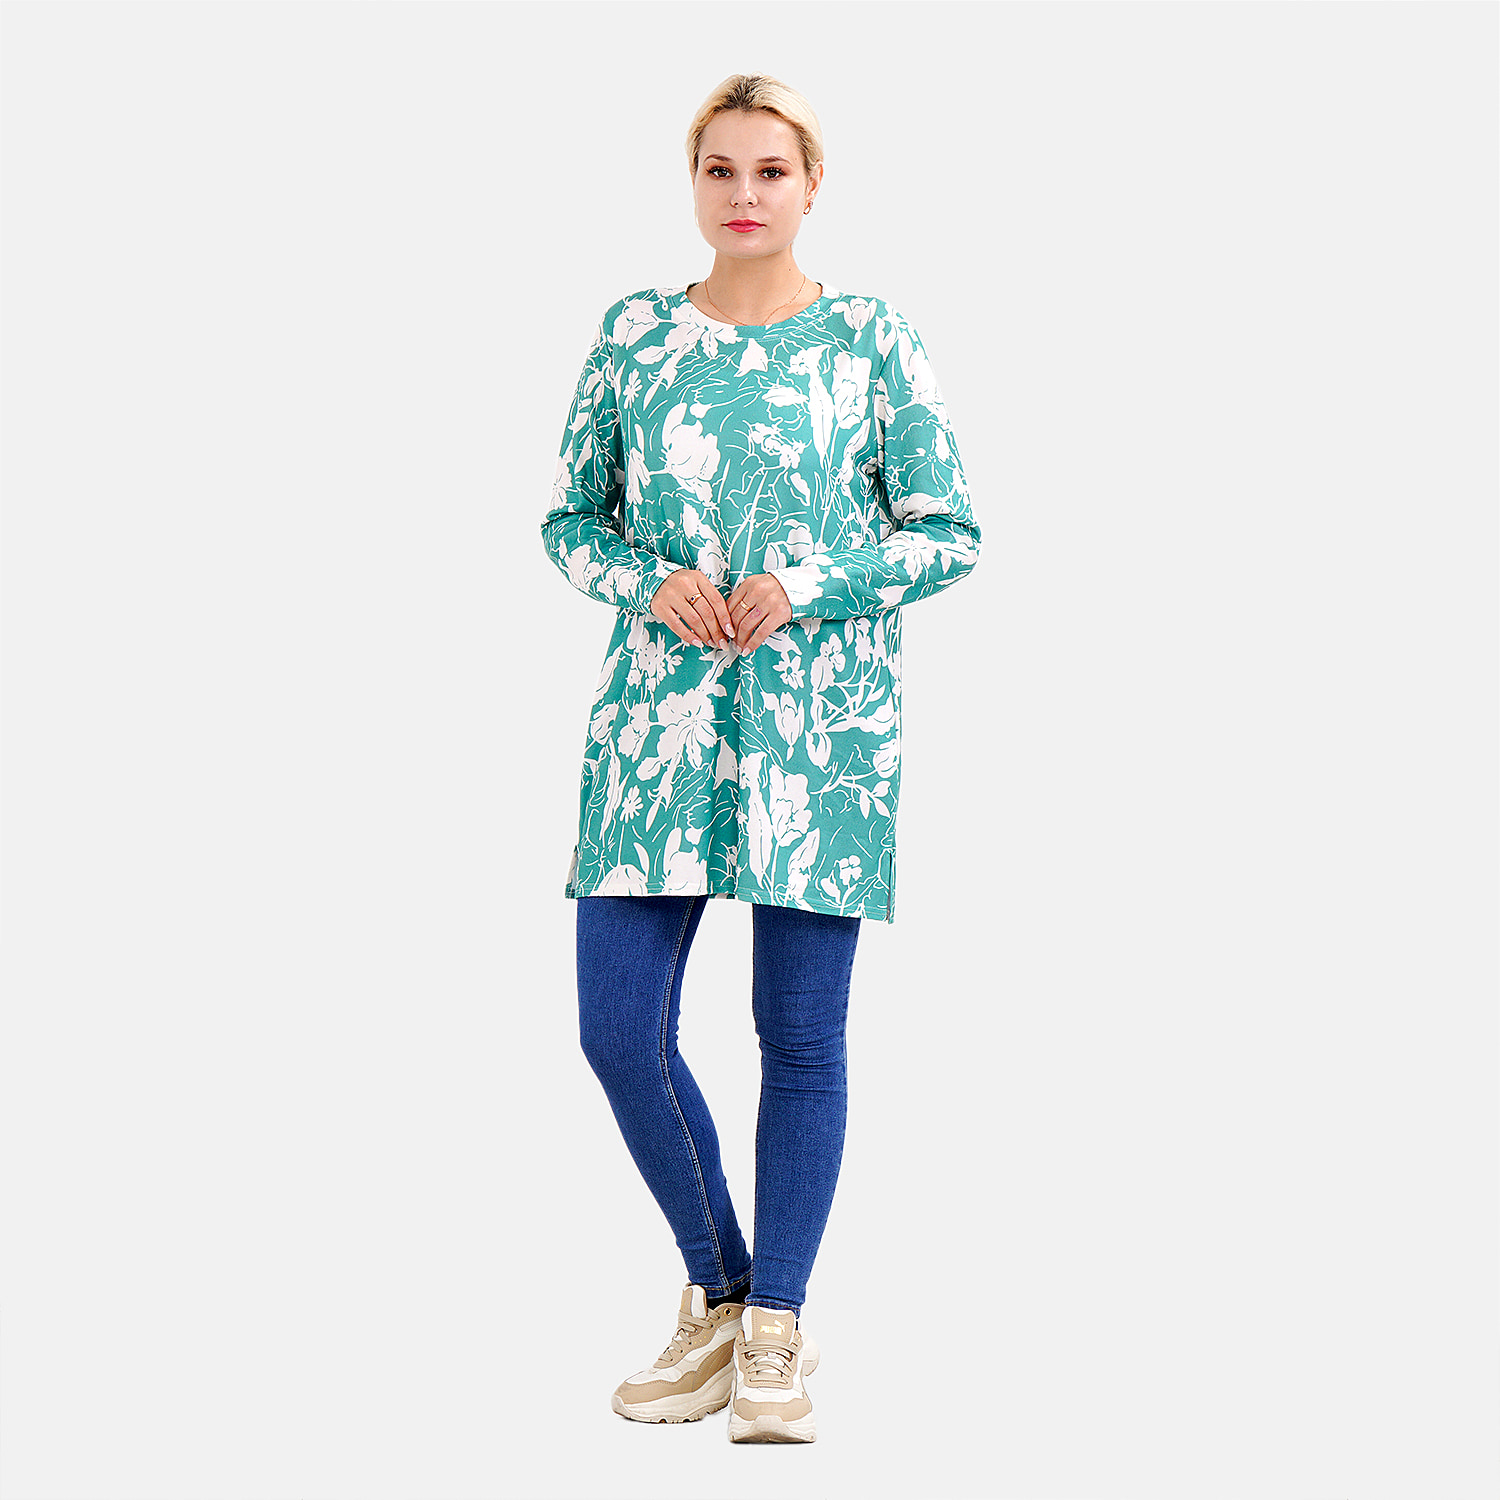 LA MAREY Floral & Leaves Pattern Jersey Top (One Size Upto UK 20) - Green